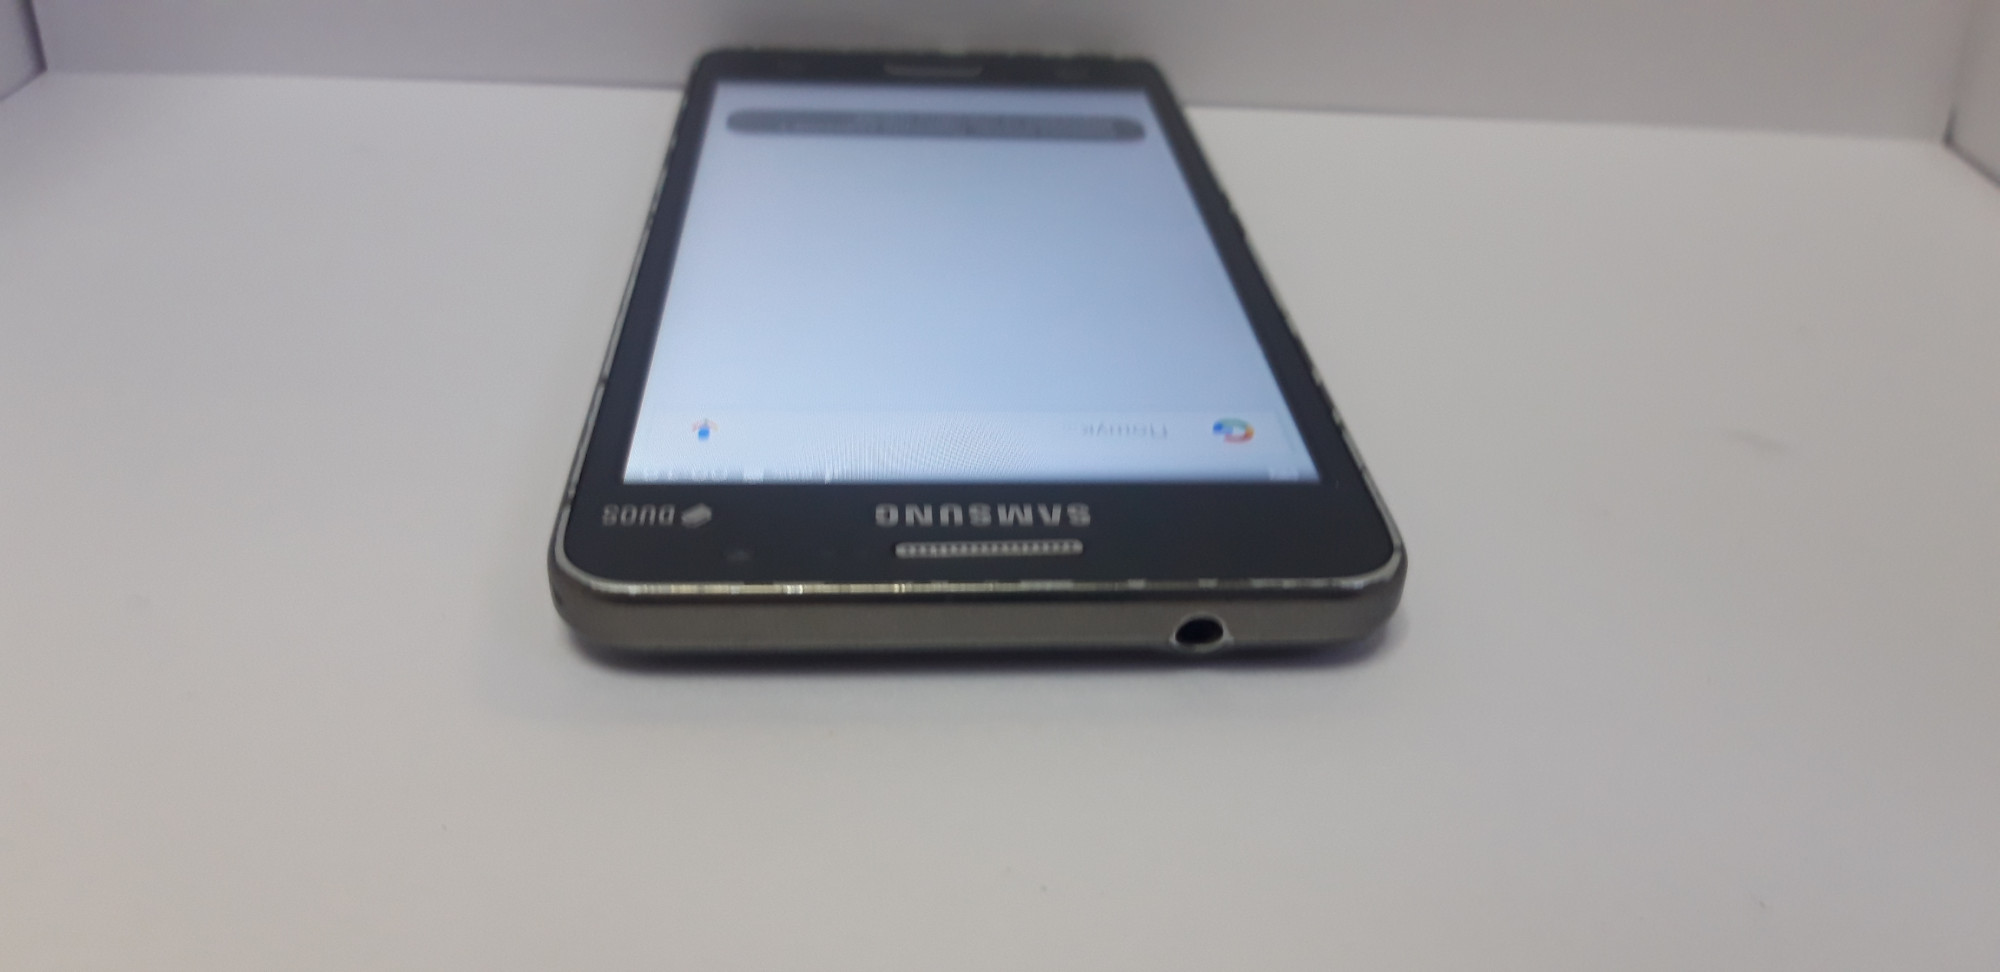 Samsung Galaxy Grand Prime VE (SM-G531H) 1/8Gb  3